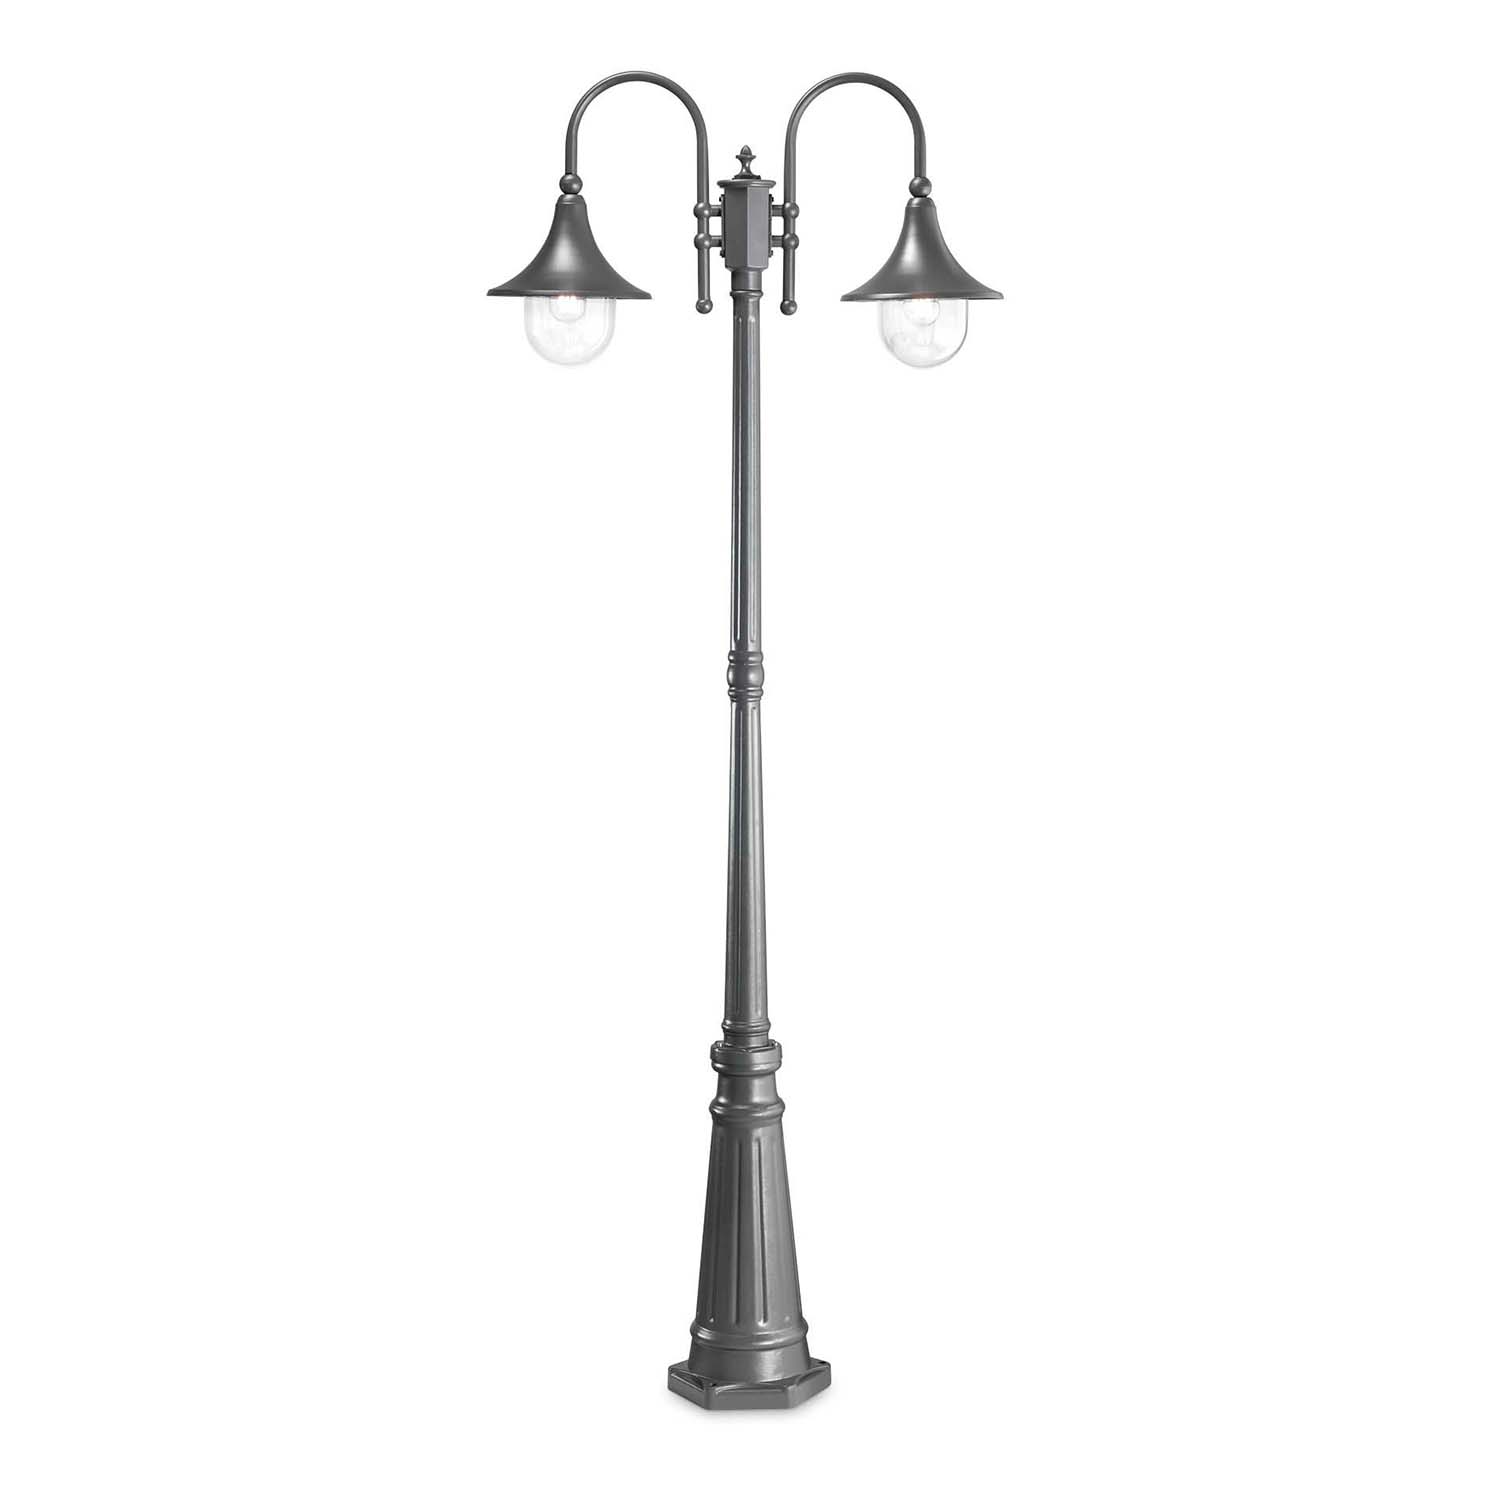 CIMA - Antique outdoor floor lamp in gray aluminum or aged brass